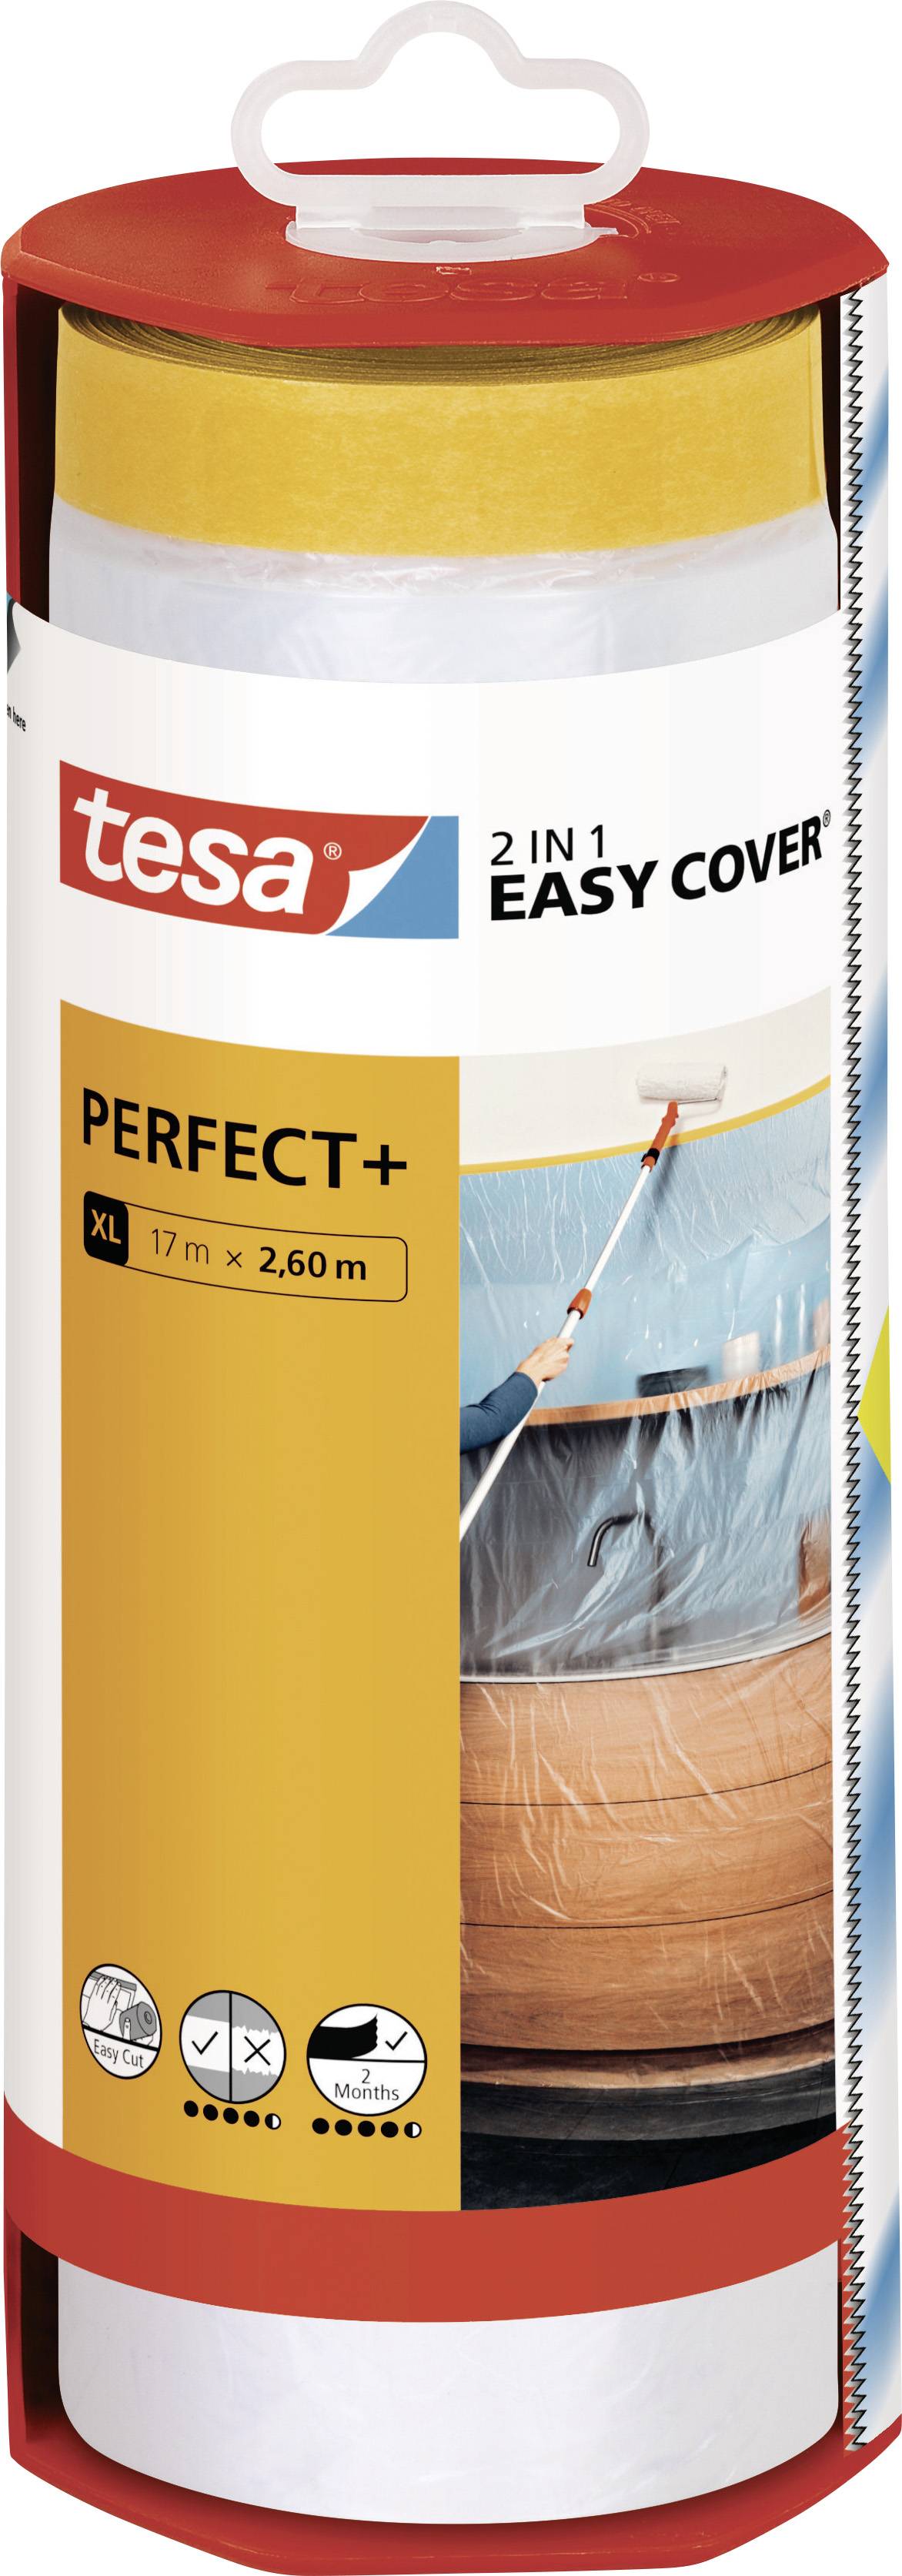 TESA Easy Cover Perfect+ 56572-00000-00 Abdeckfolie Gelb, Transparent (L x B) 17 m x 2.60 m 1 S